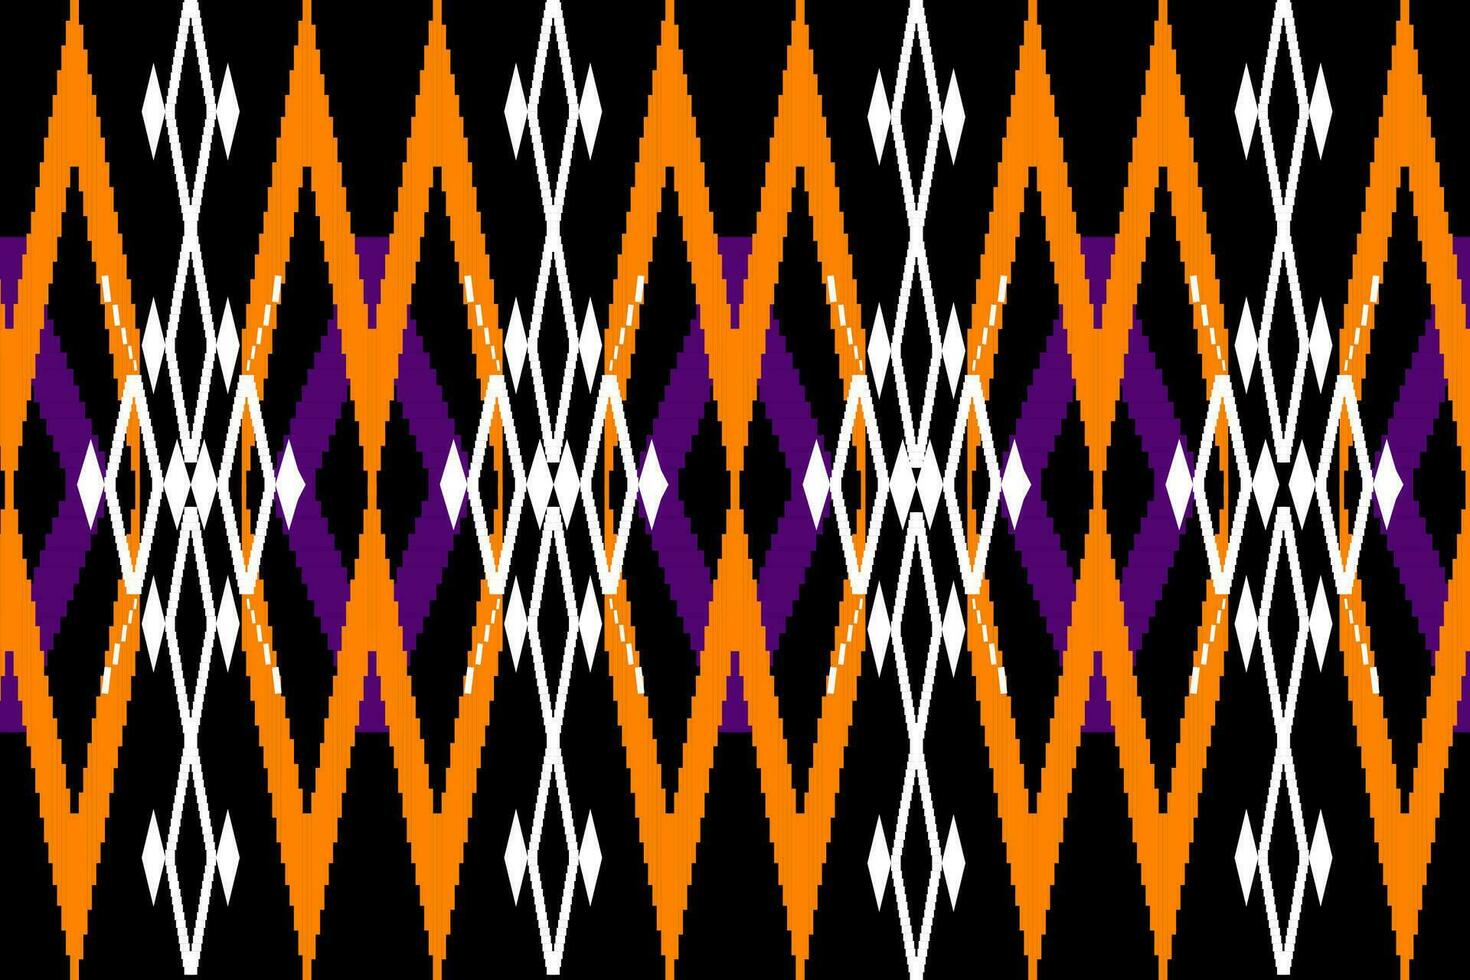 ikat vektor etnisk sömlös mönster design. ikat aztec tyg matta ornament textil- dekorationer tapet. stam- boho inföding etnisk Kalkon traditionell broderi vektor bakgrund